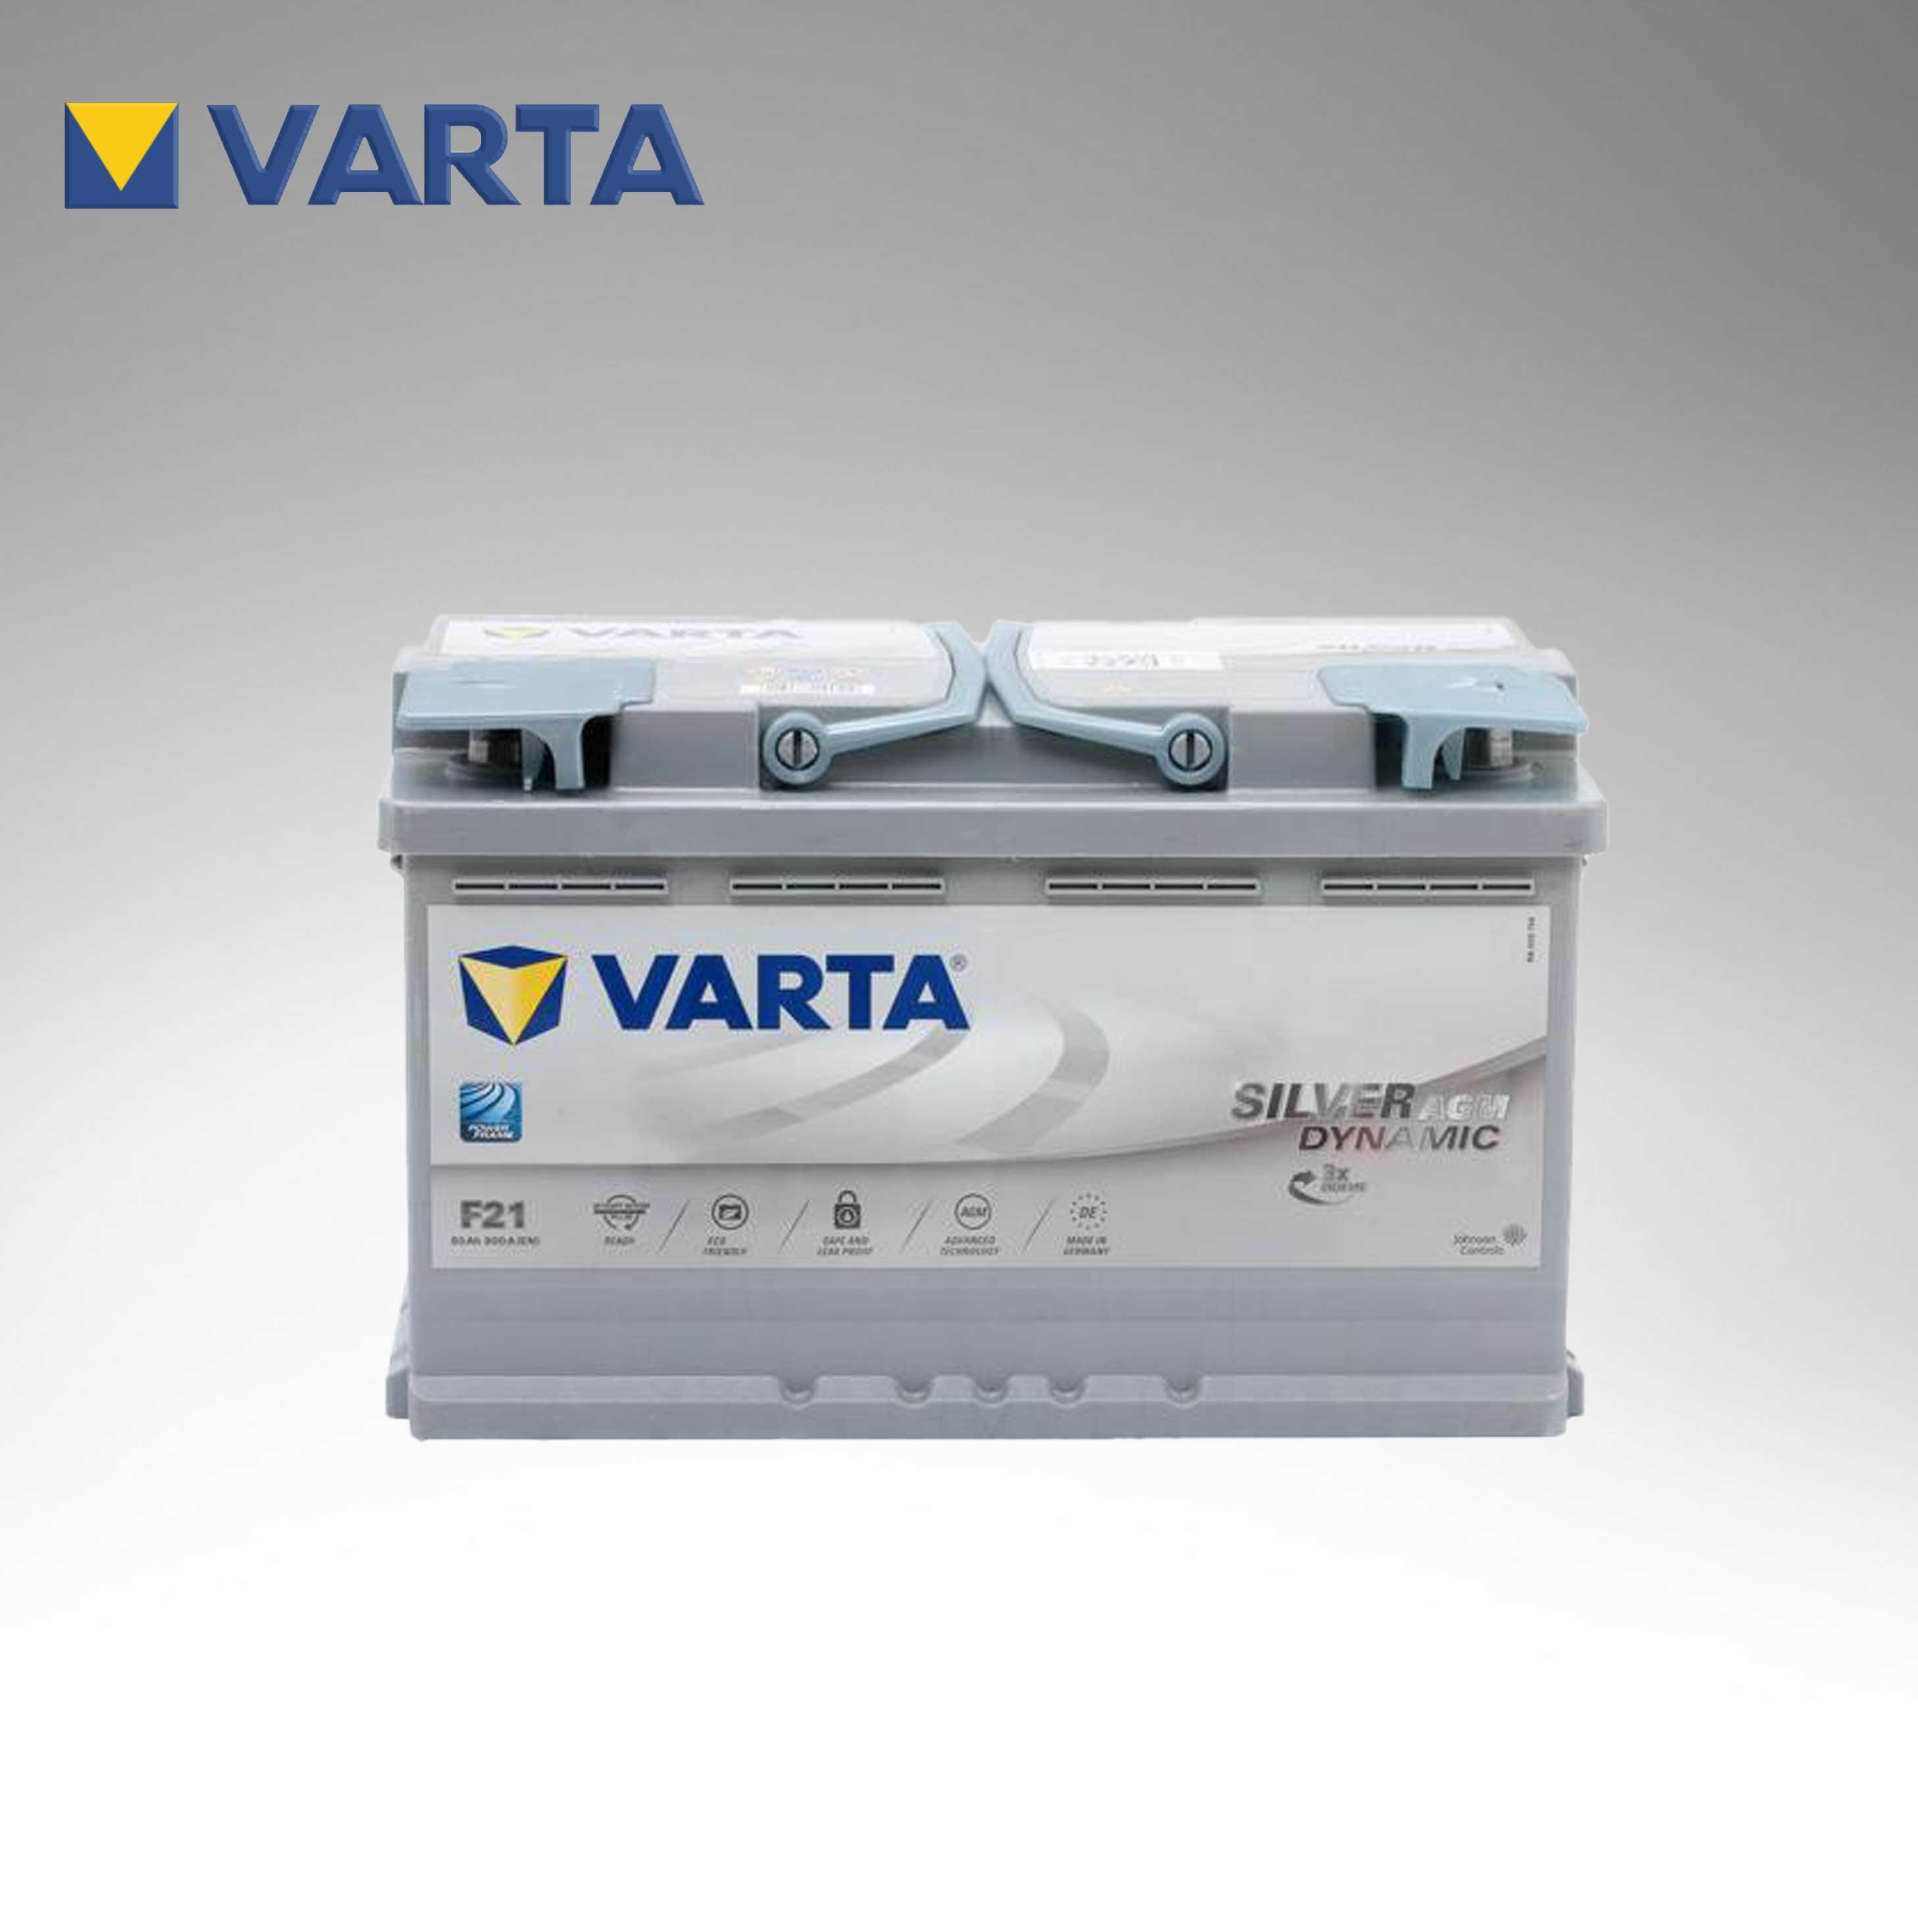 VARTA BATTERY 80AH AGM / VB580901 / F21 For MERCEDES BENZ  0019828108